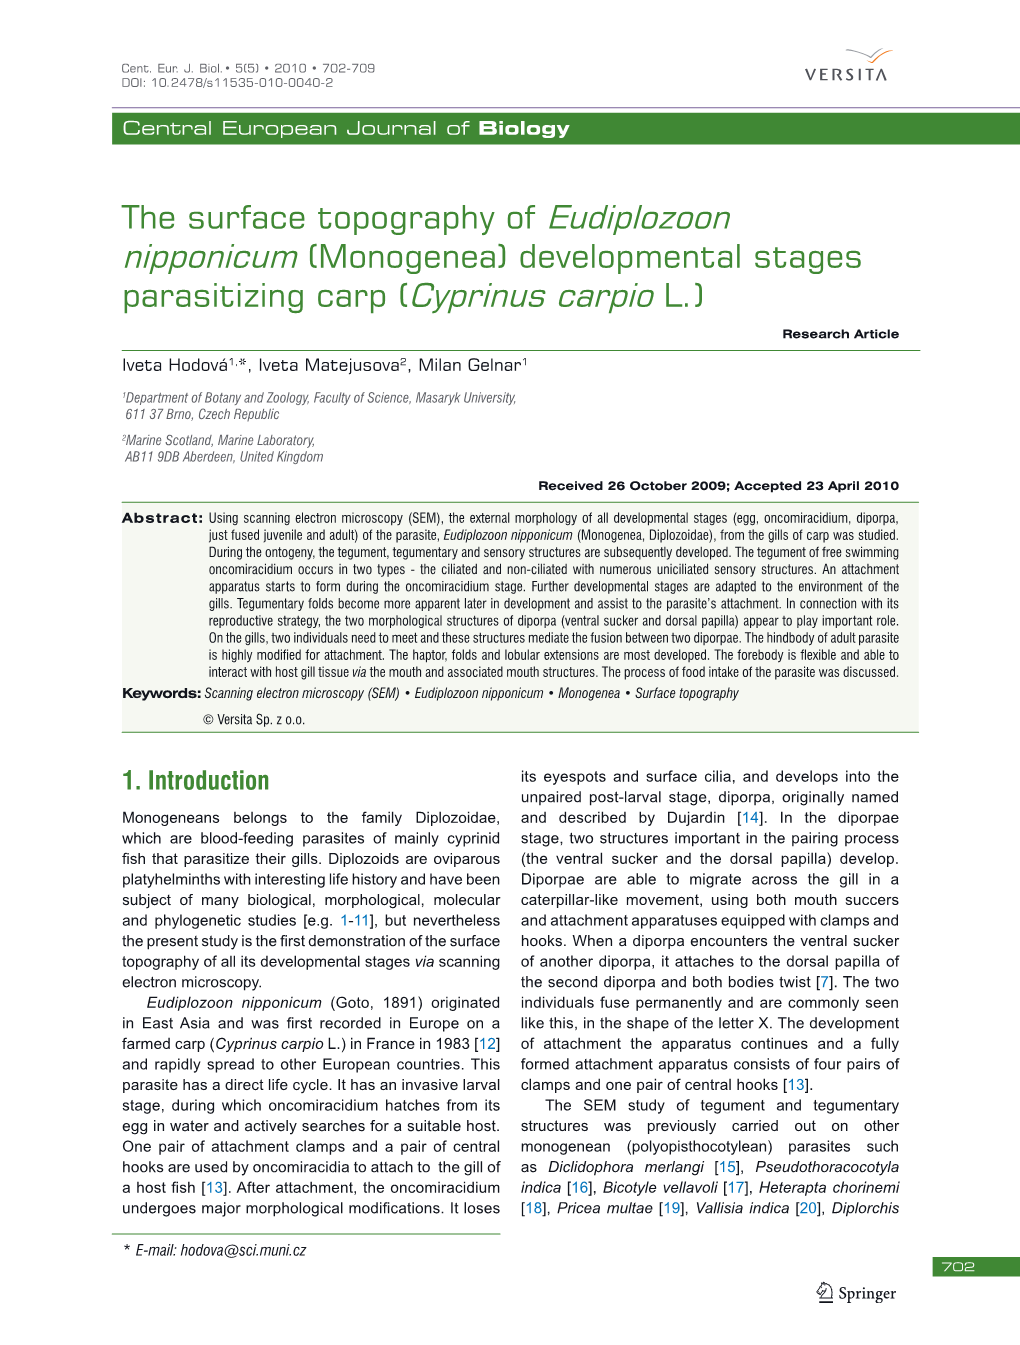 The Surface Topography of Eudiplozoon Nipponicum (Monogenea) Developmental Stages Parasitizing Carp (Cyprinus Carpio L.)